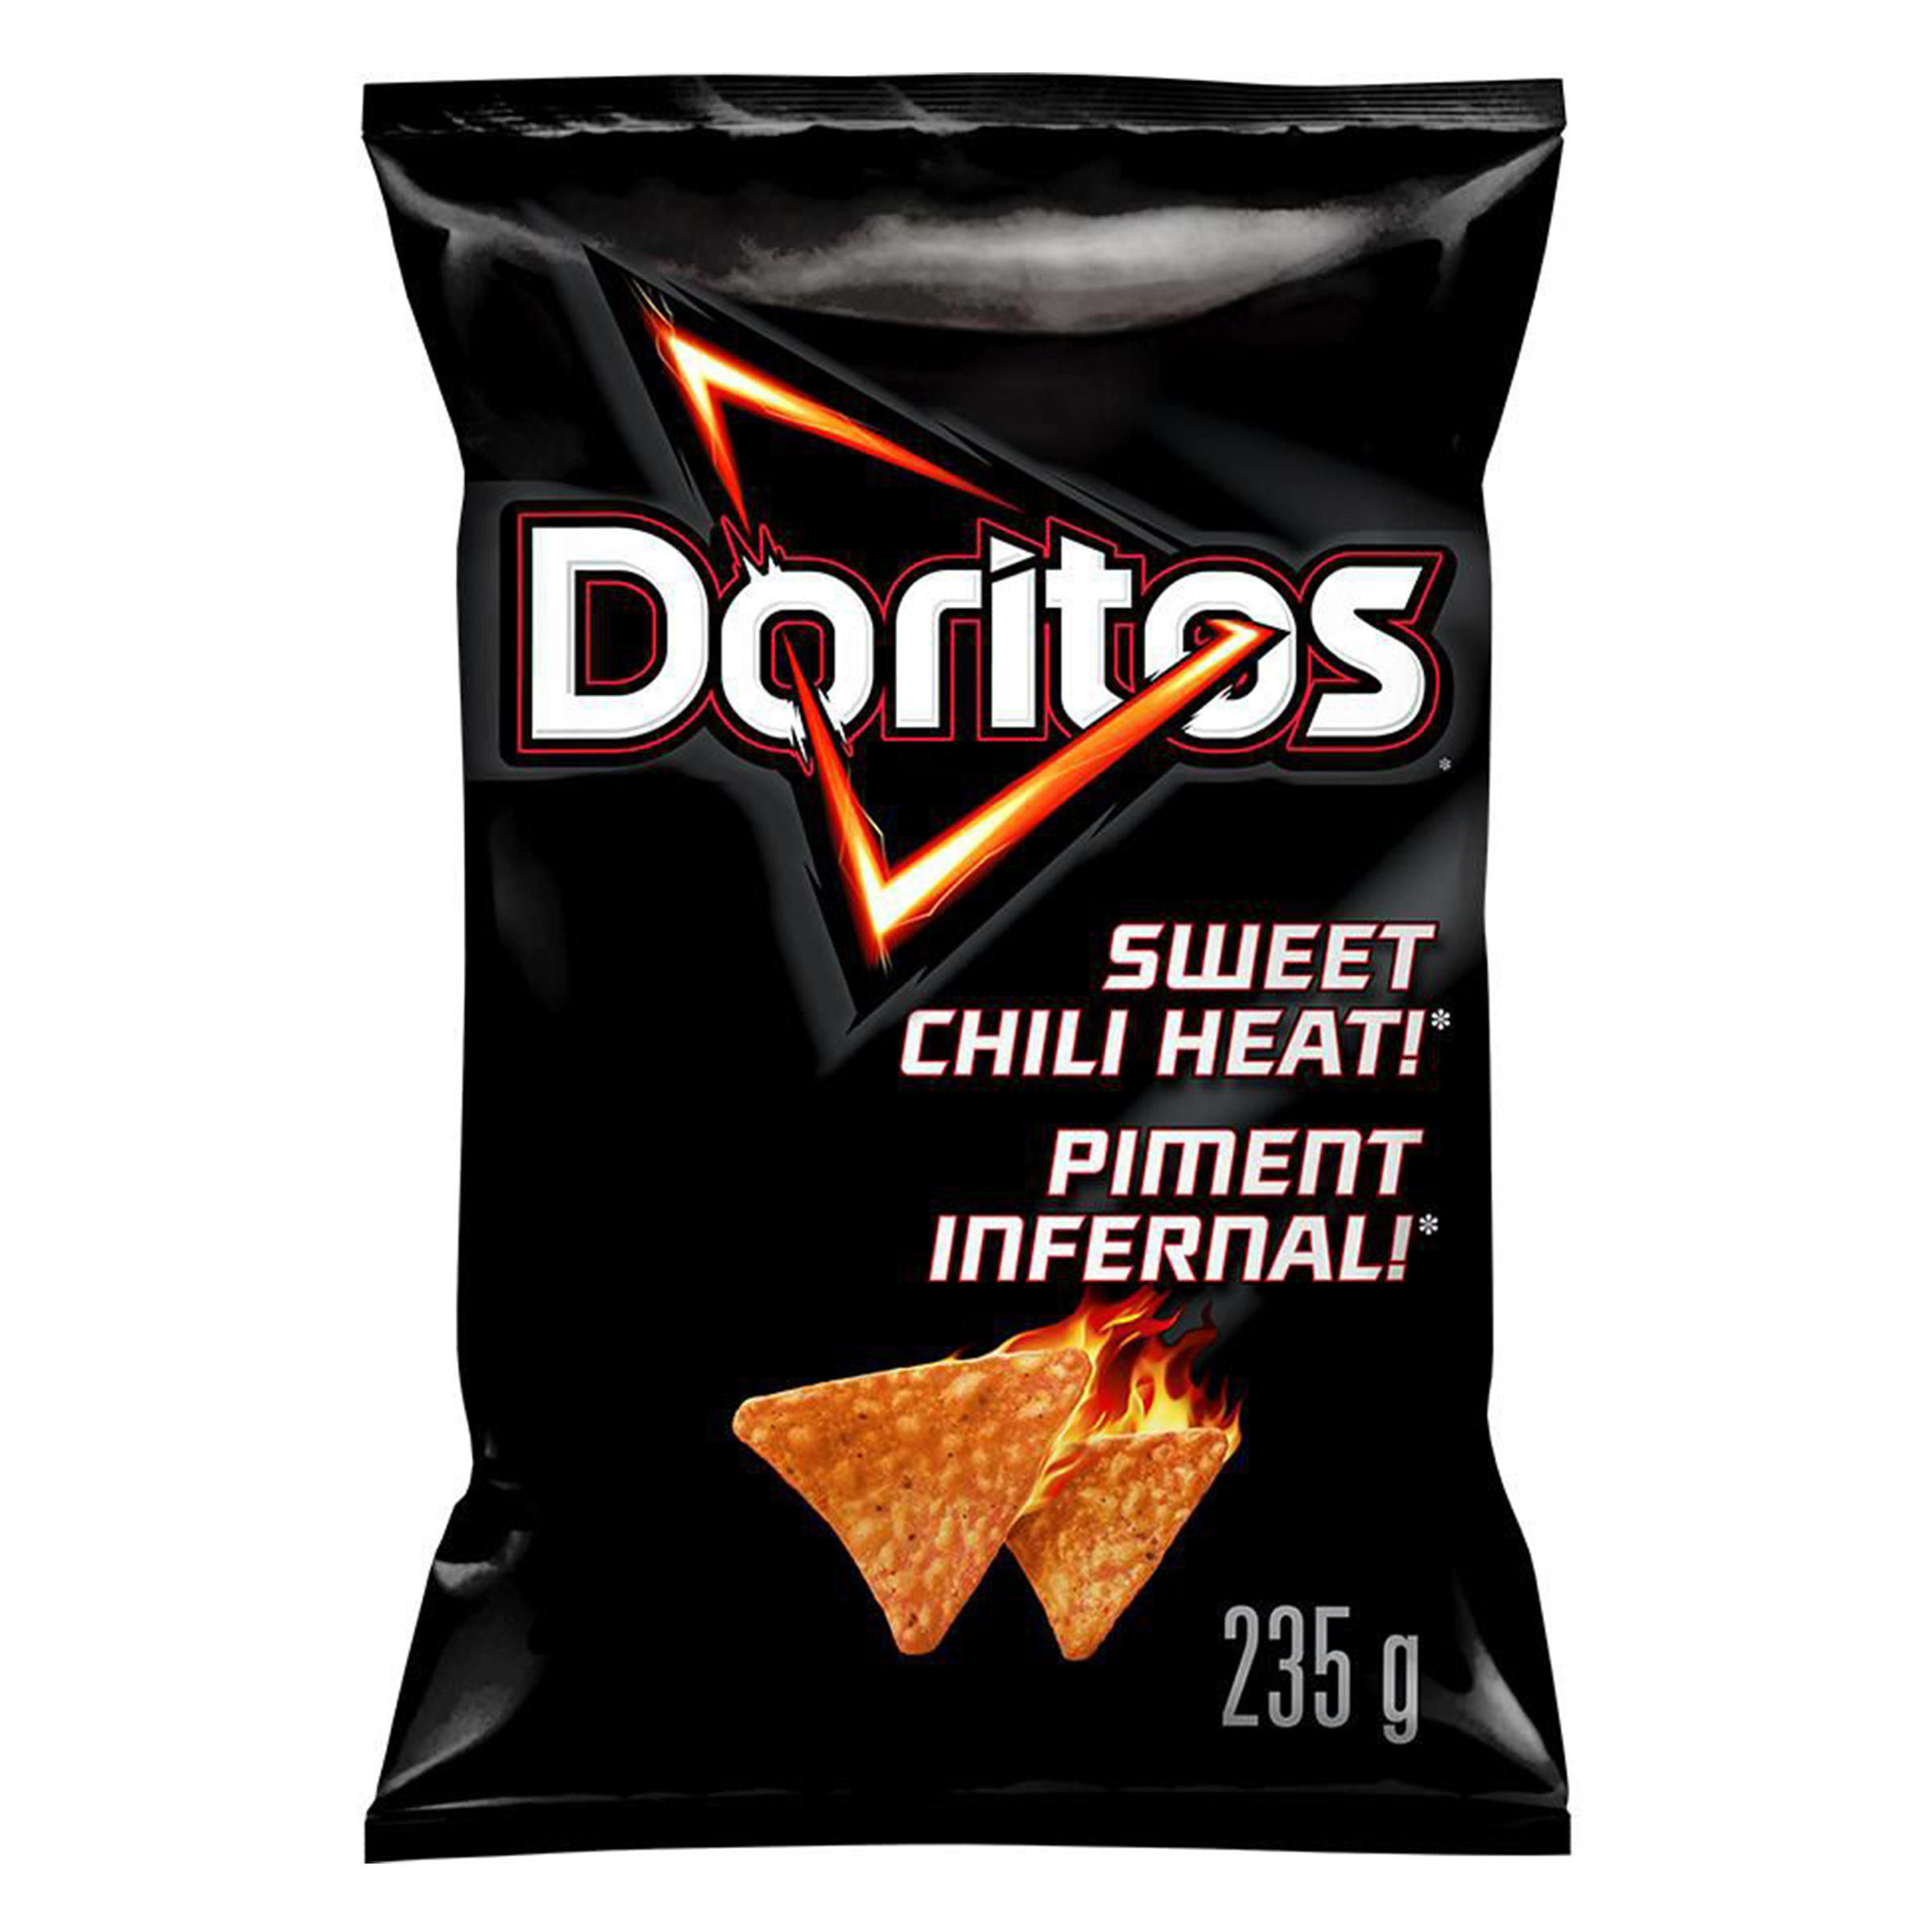 Doritos - Sweet Chili Heat!